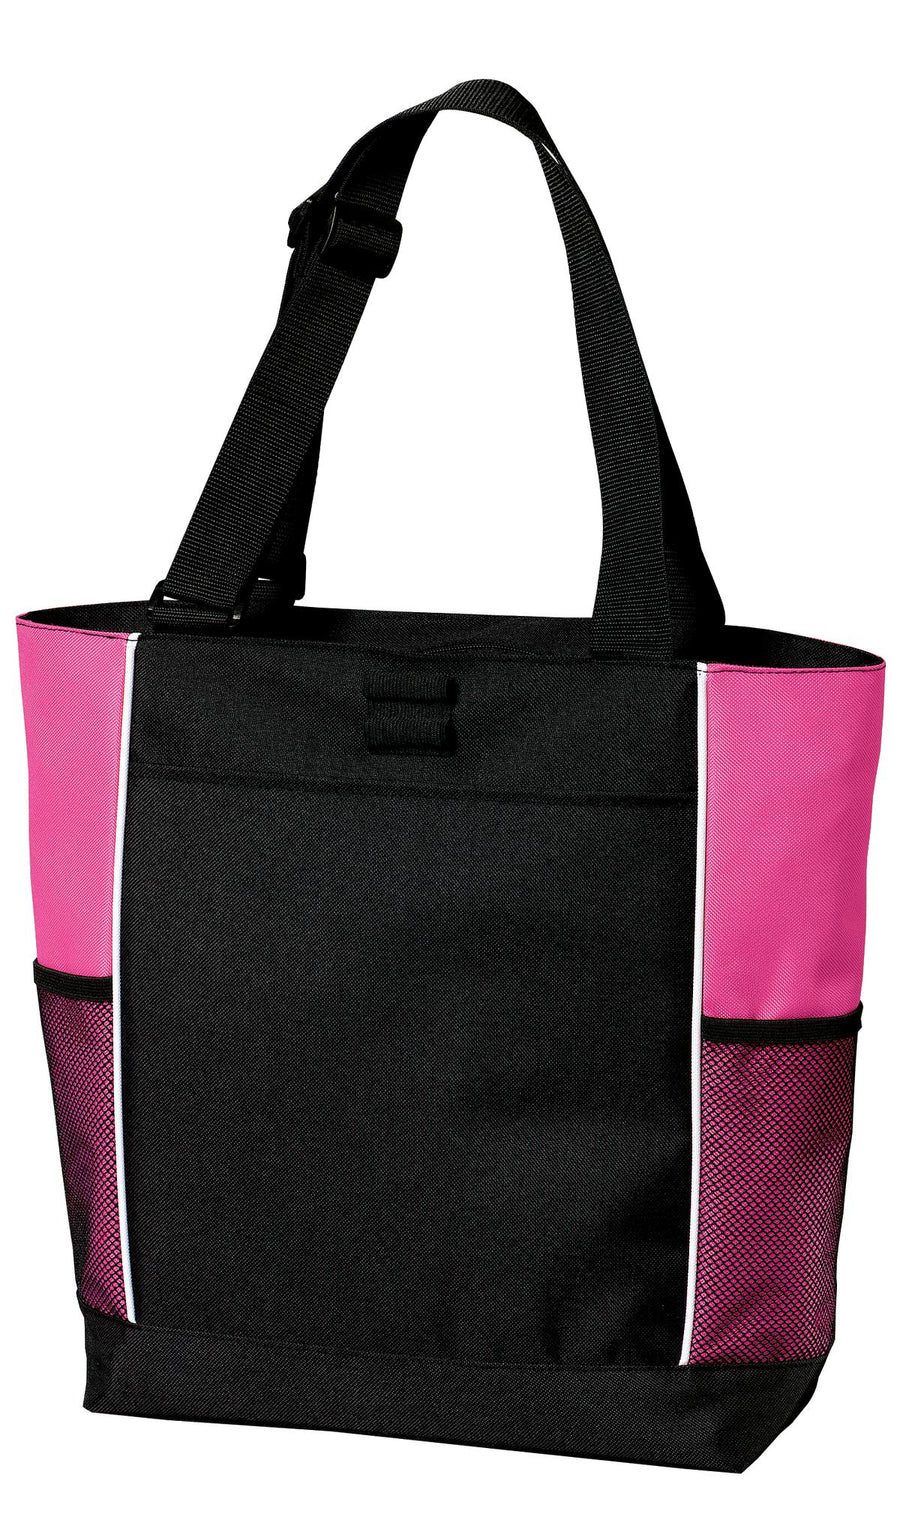 B5160-Black/ Tropical Pink-front_model